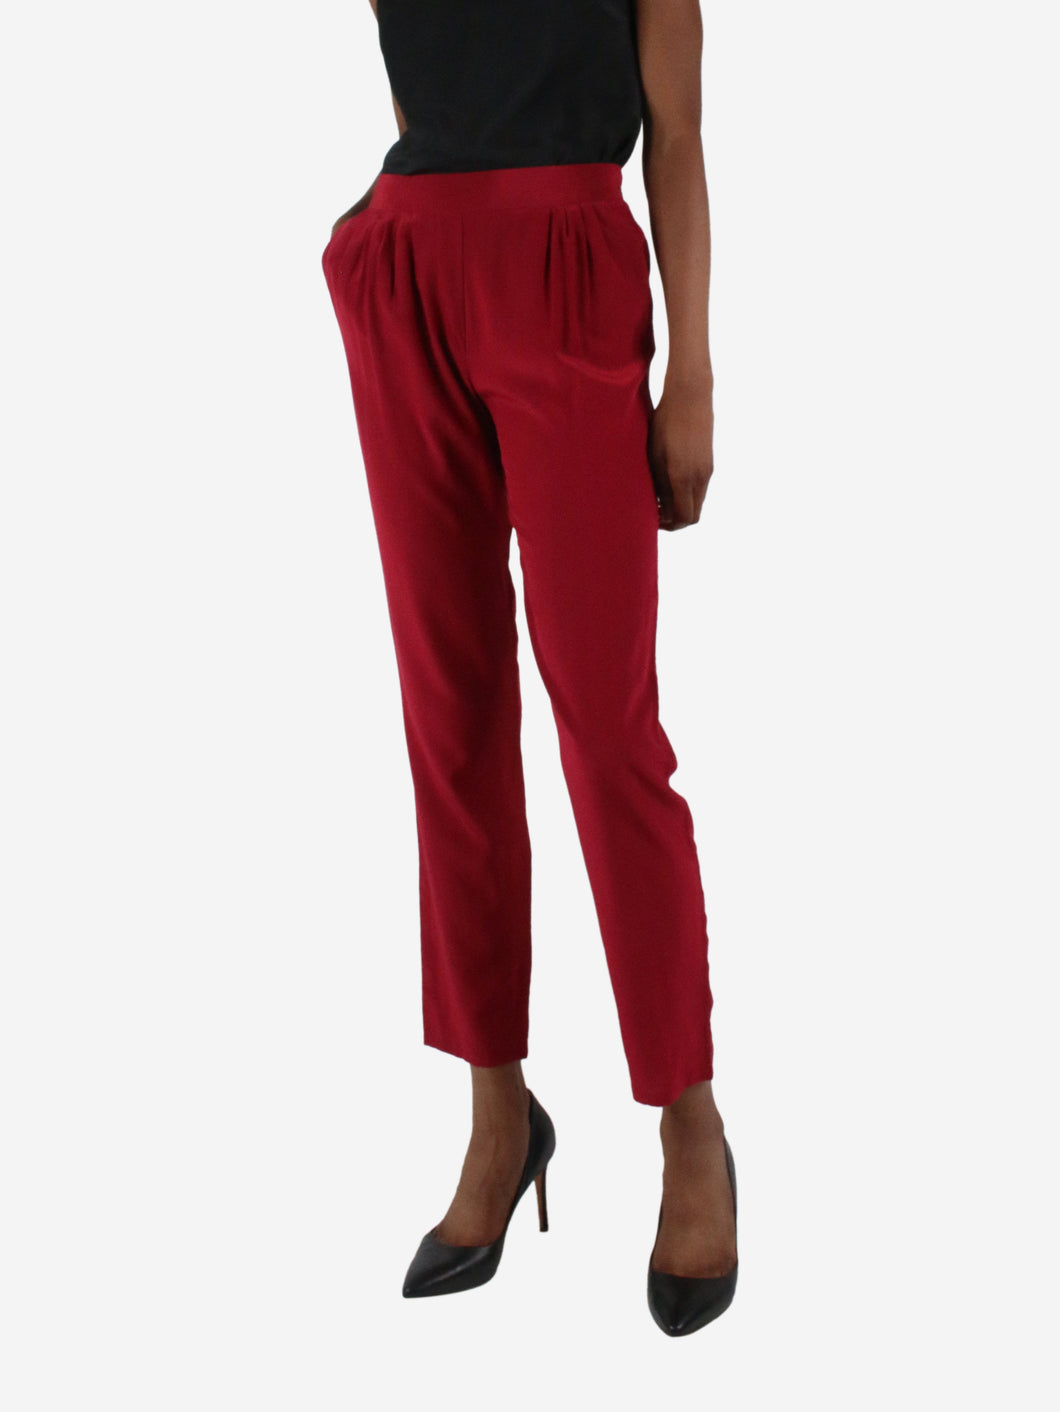 Red silk trousers - size EU 34 Trousers Masscob 